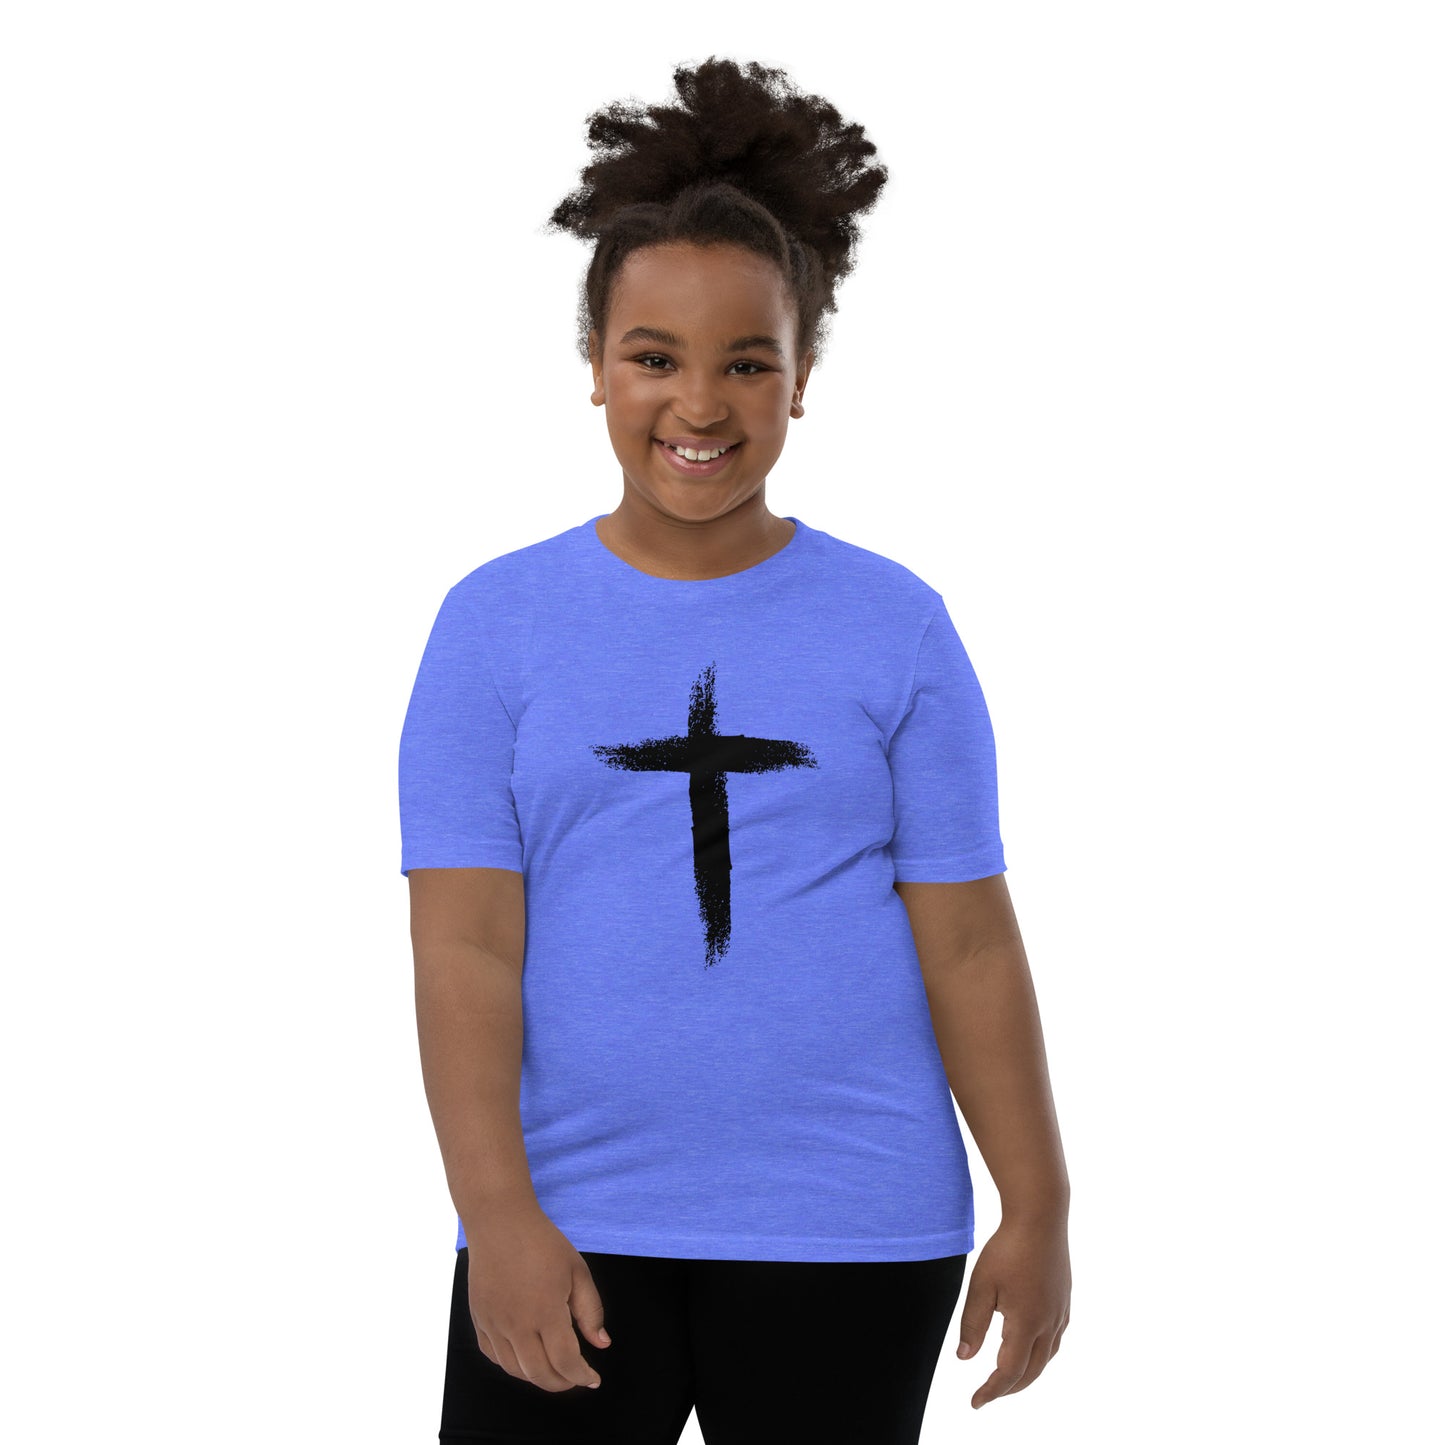 Brushed Cross Short Sleeve T-Shirt